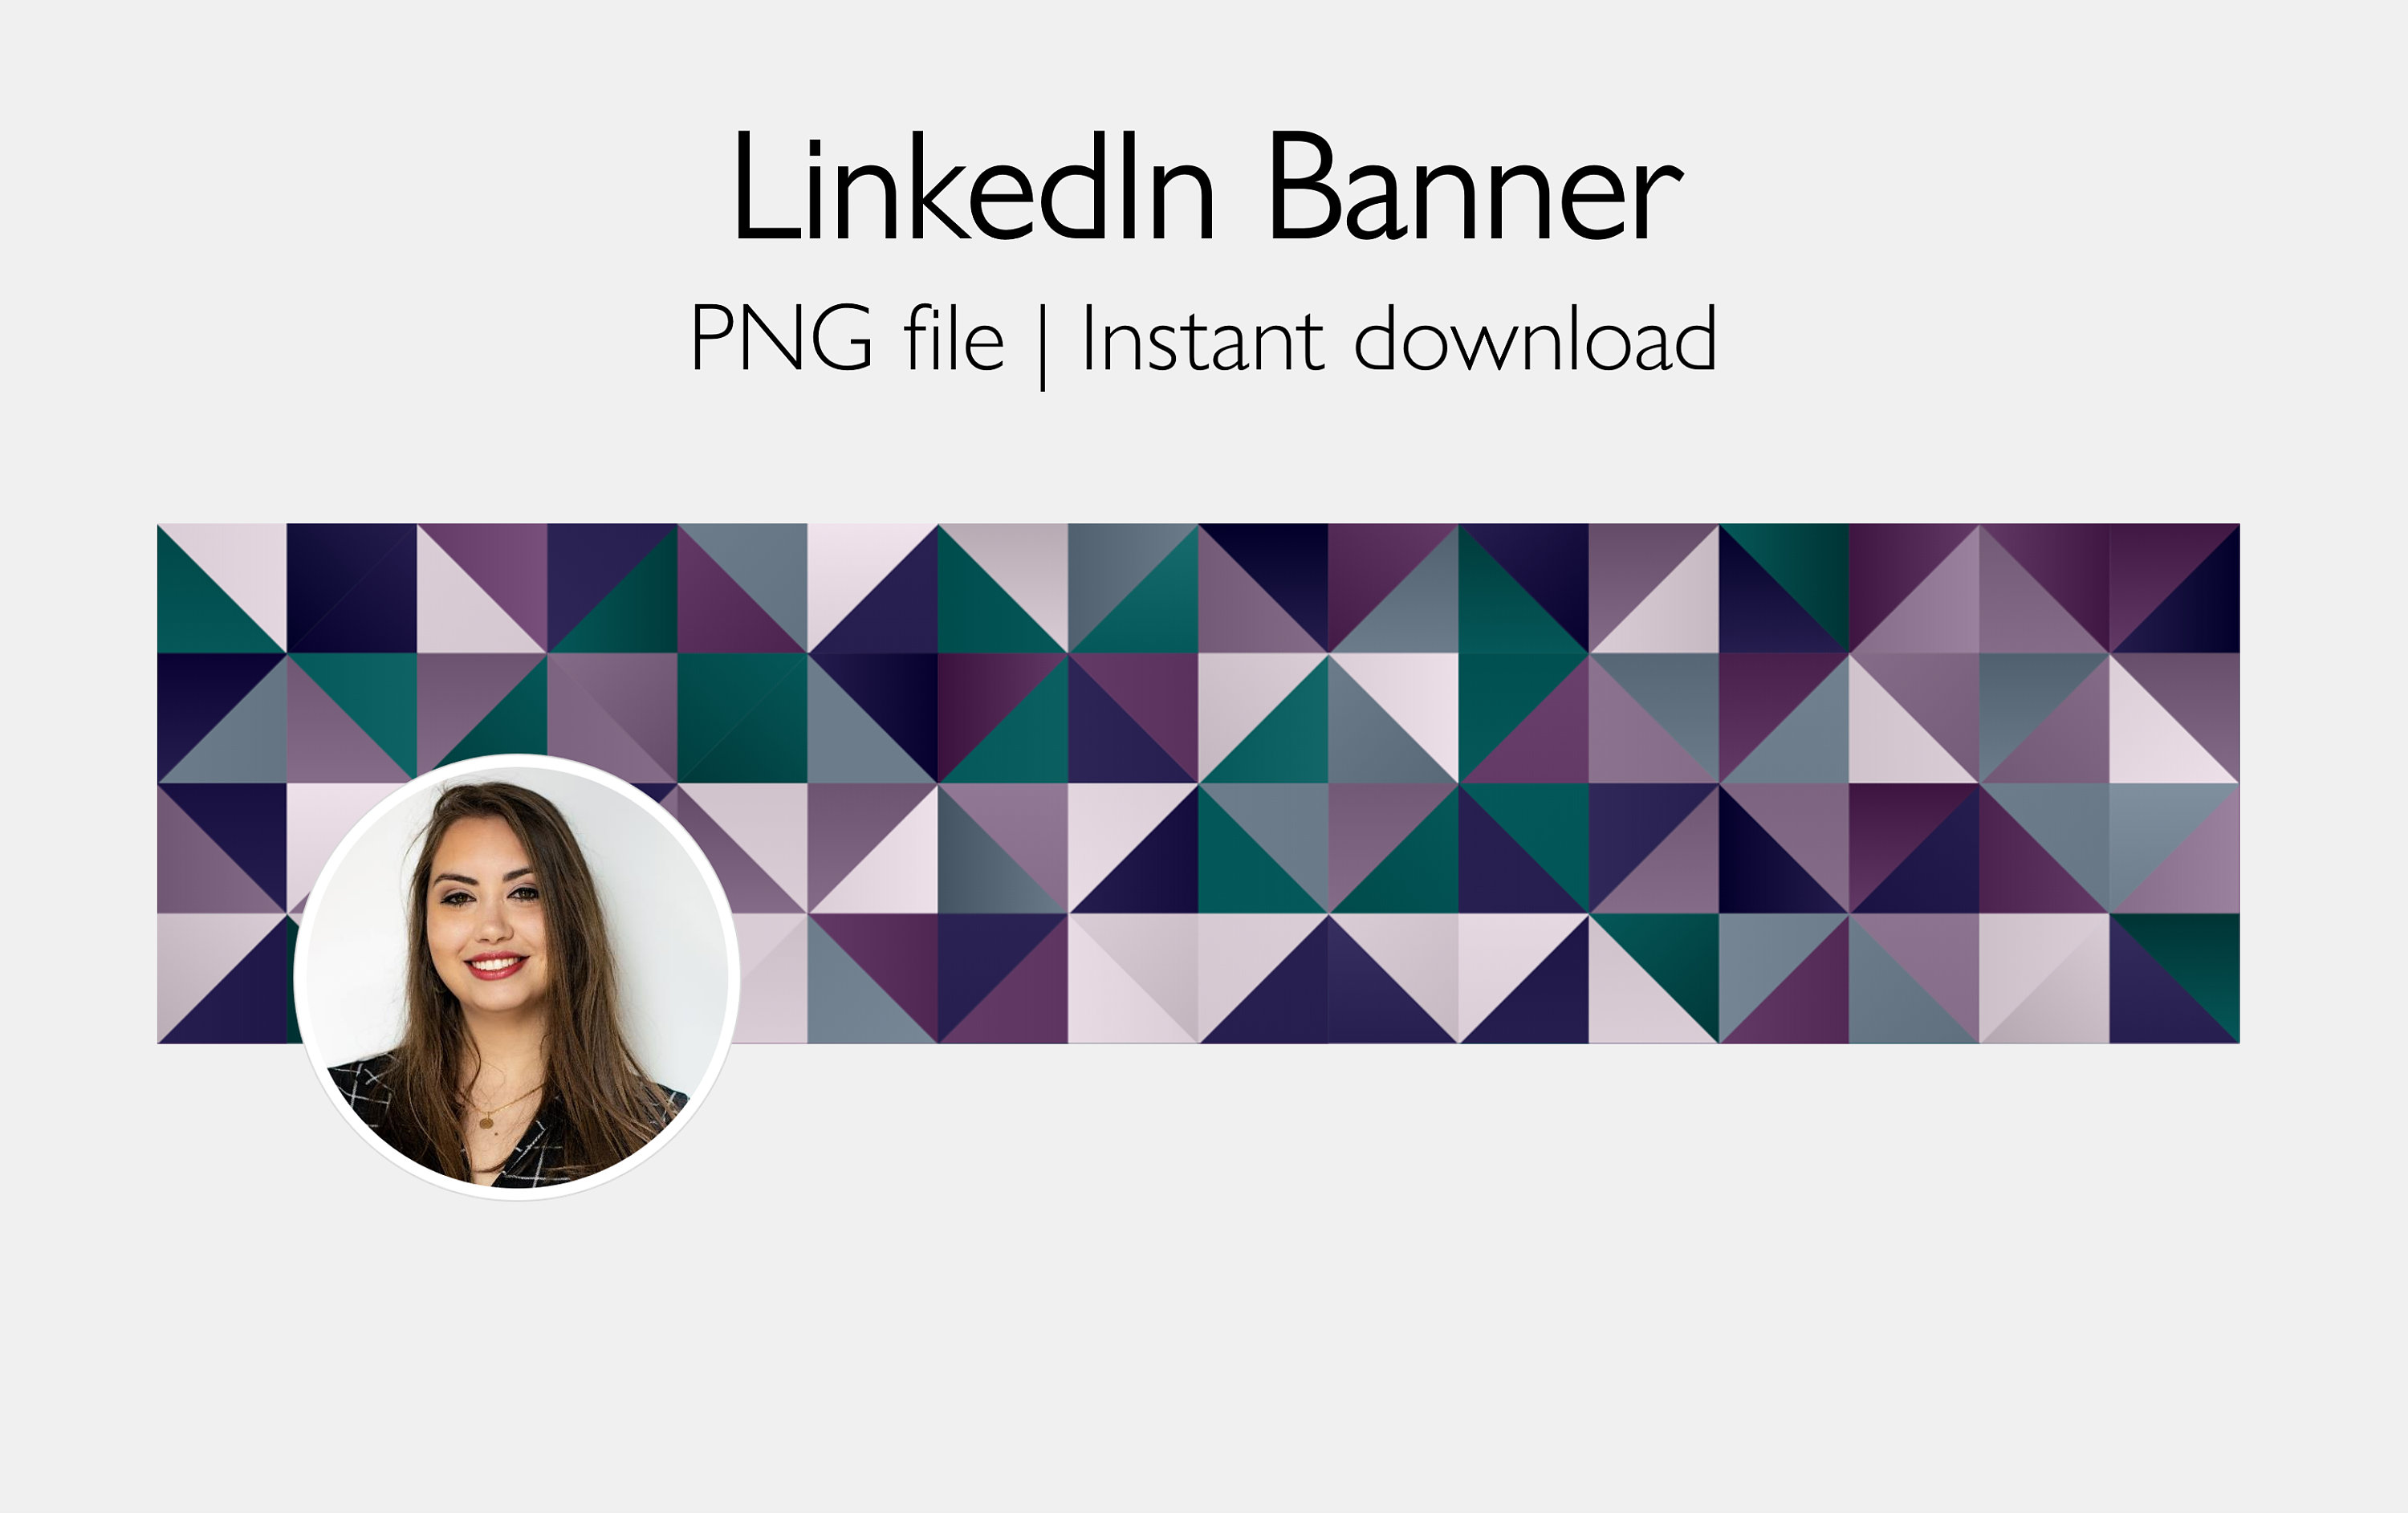 linkedin banner size for mobile